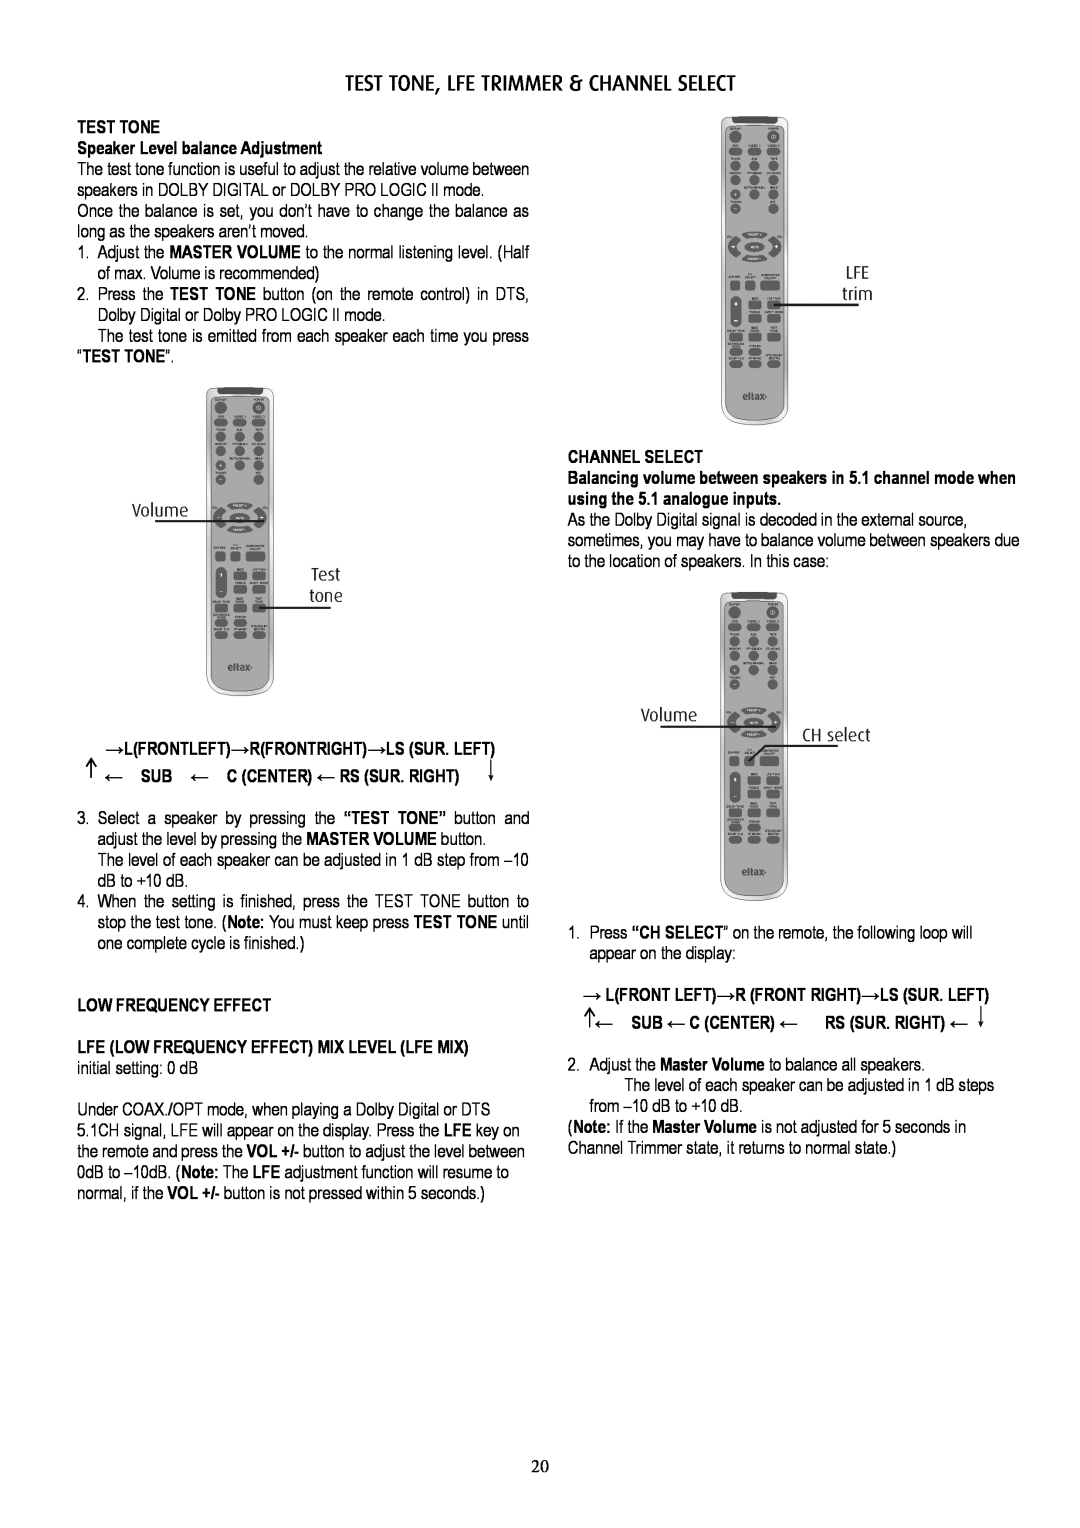 Eltax AVR-320 Test Tone, Lfe Trimmer & Channel Select, TEST TONE Speaker Level balance Adjustment, Low Frequency Effect 